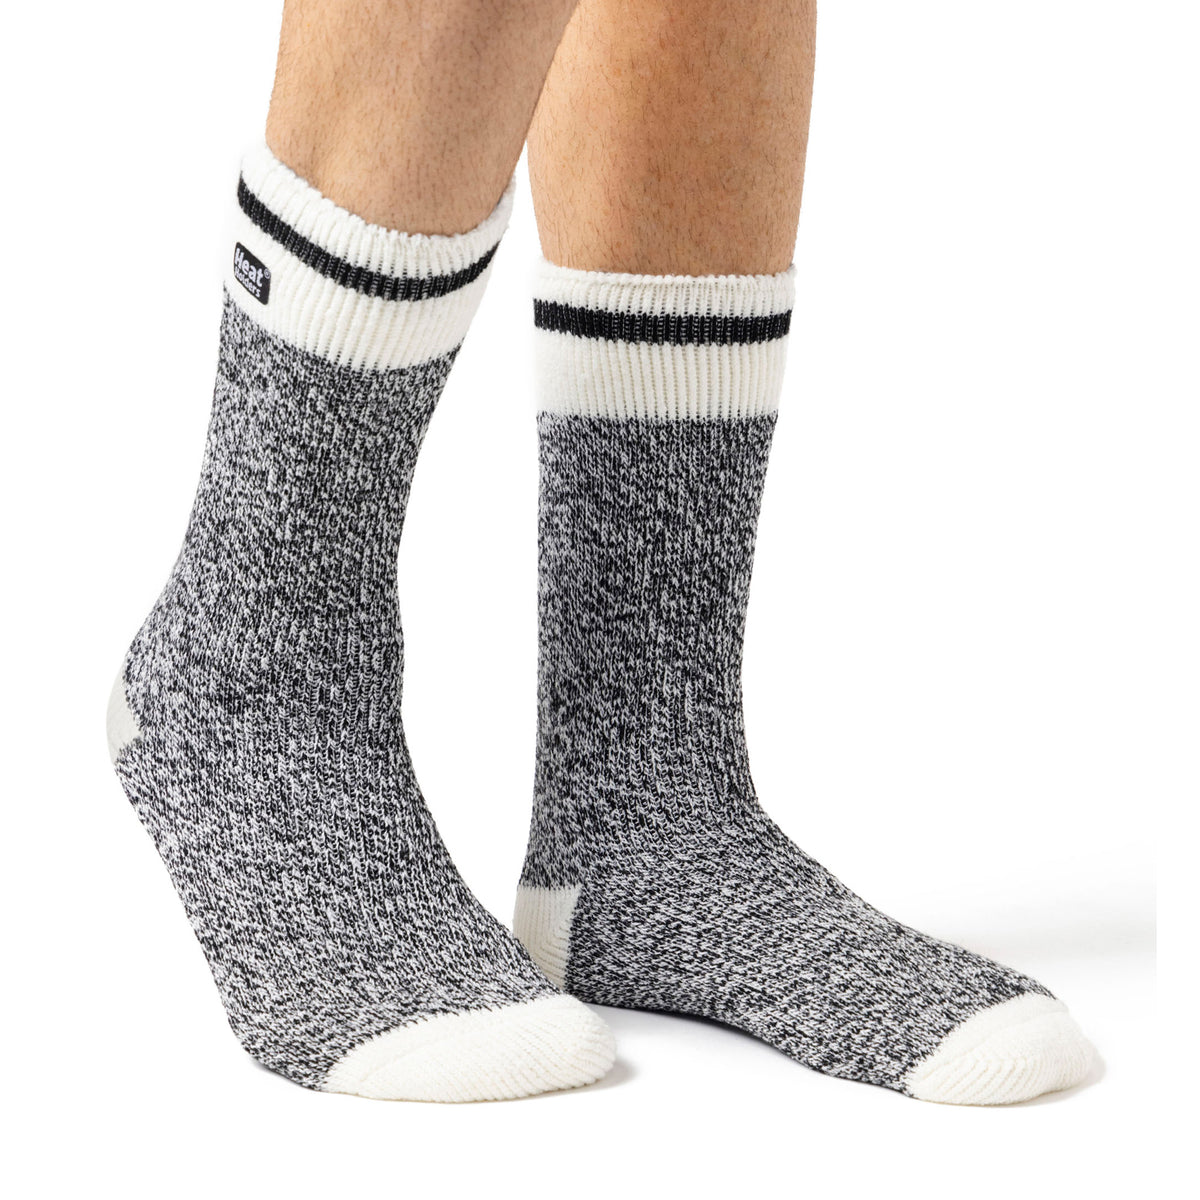 Mens Black & White Striped Socks